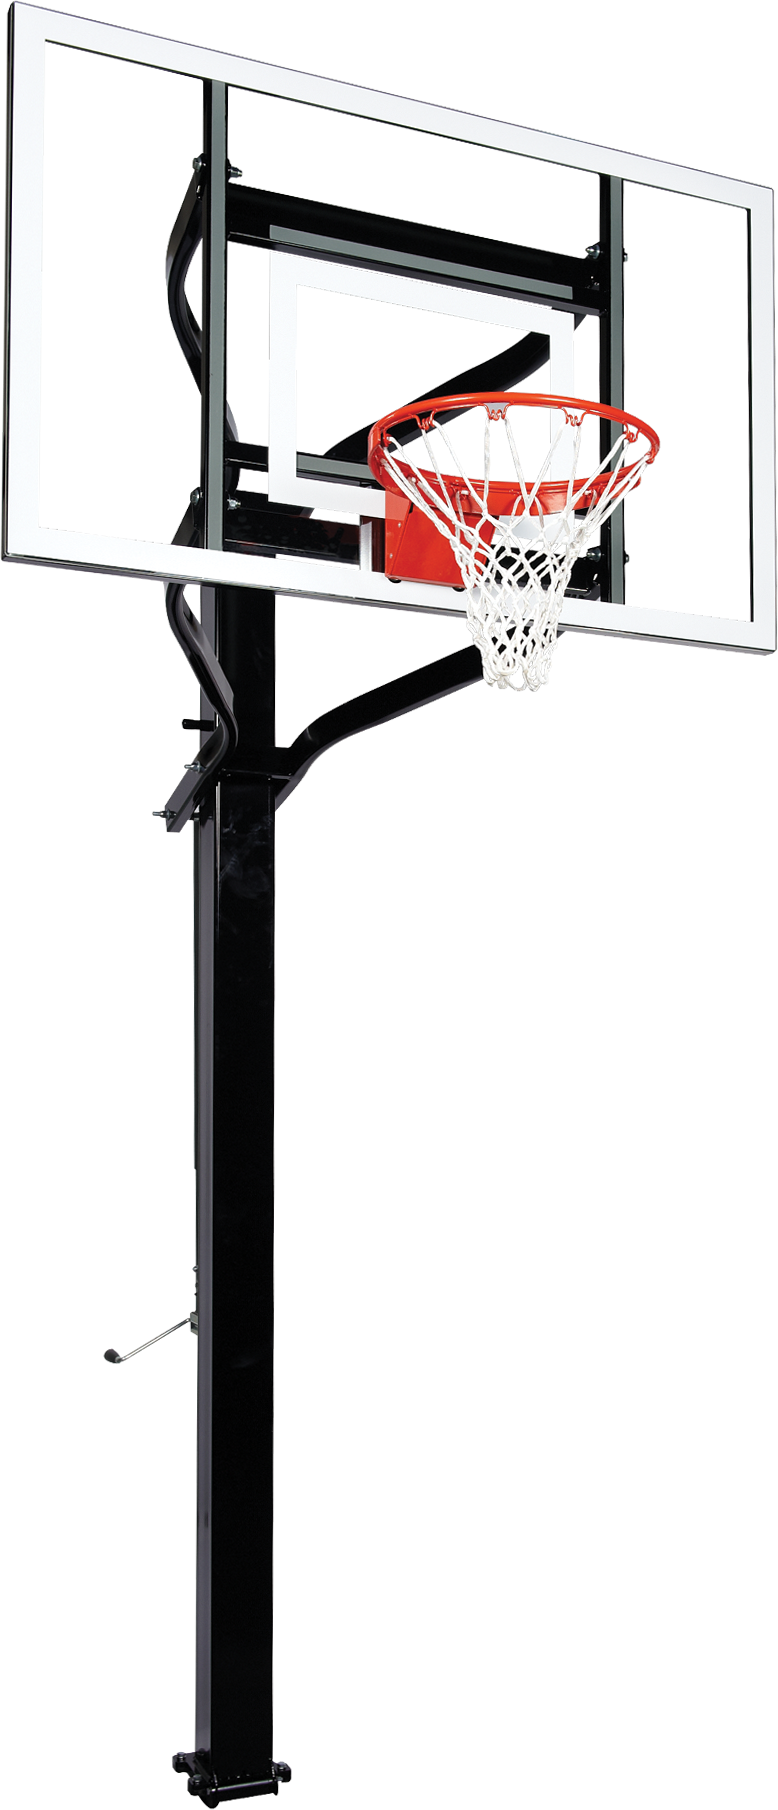 Goalsetter X660 extreme basketball goals - Glass - HD Breakaway Rim - best in ground basketball hoops